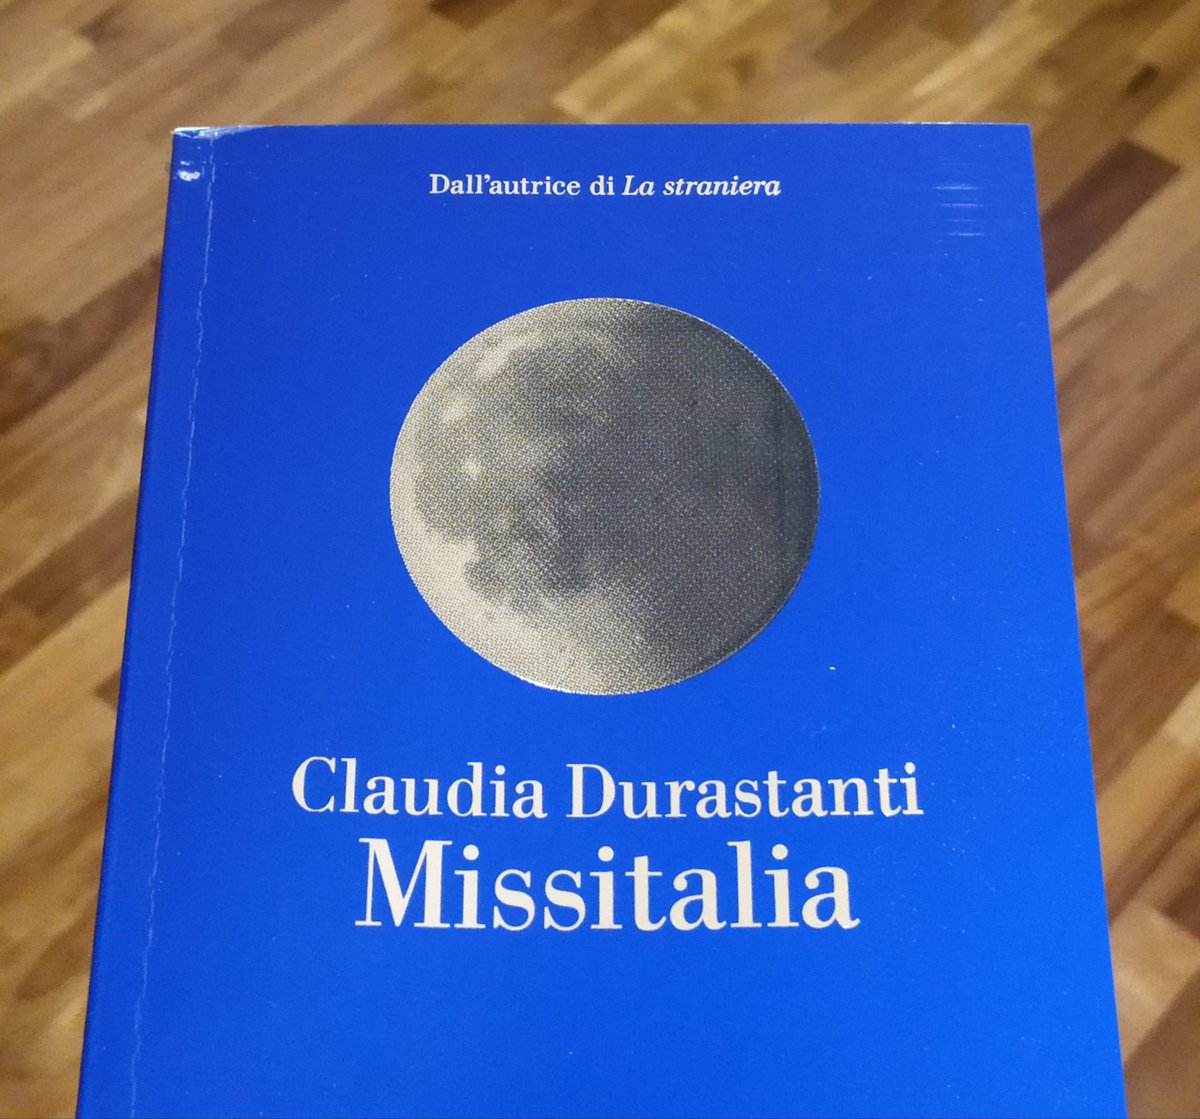 #ClaudiaDurastanti #Missitalia